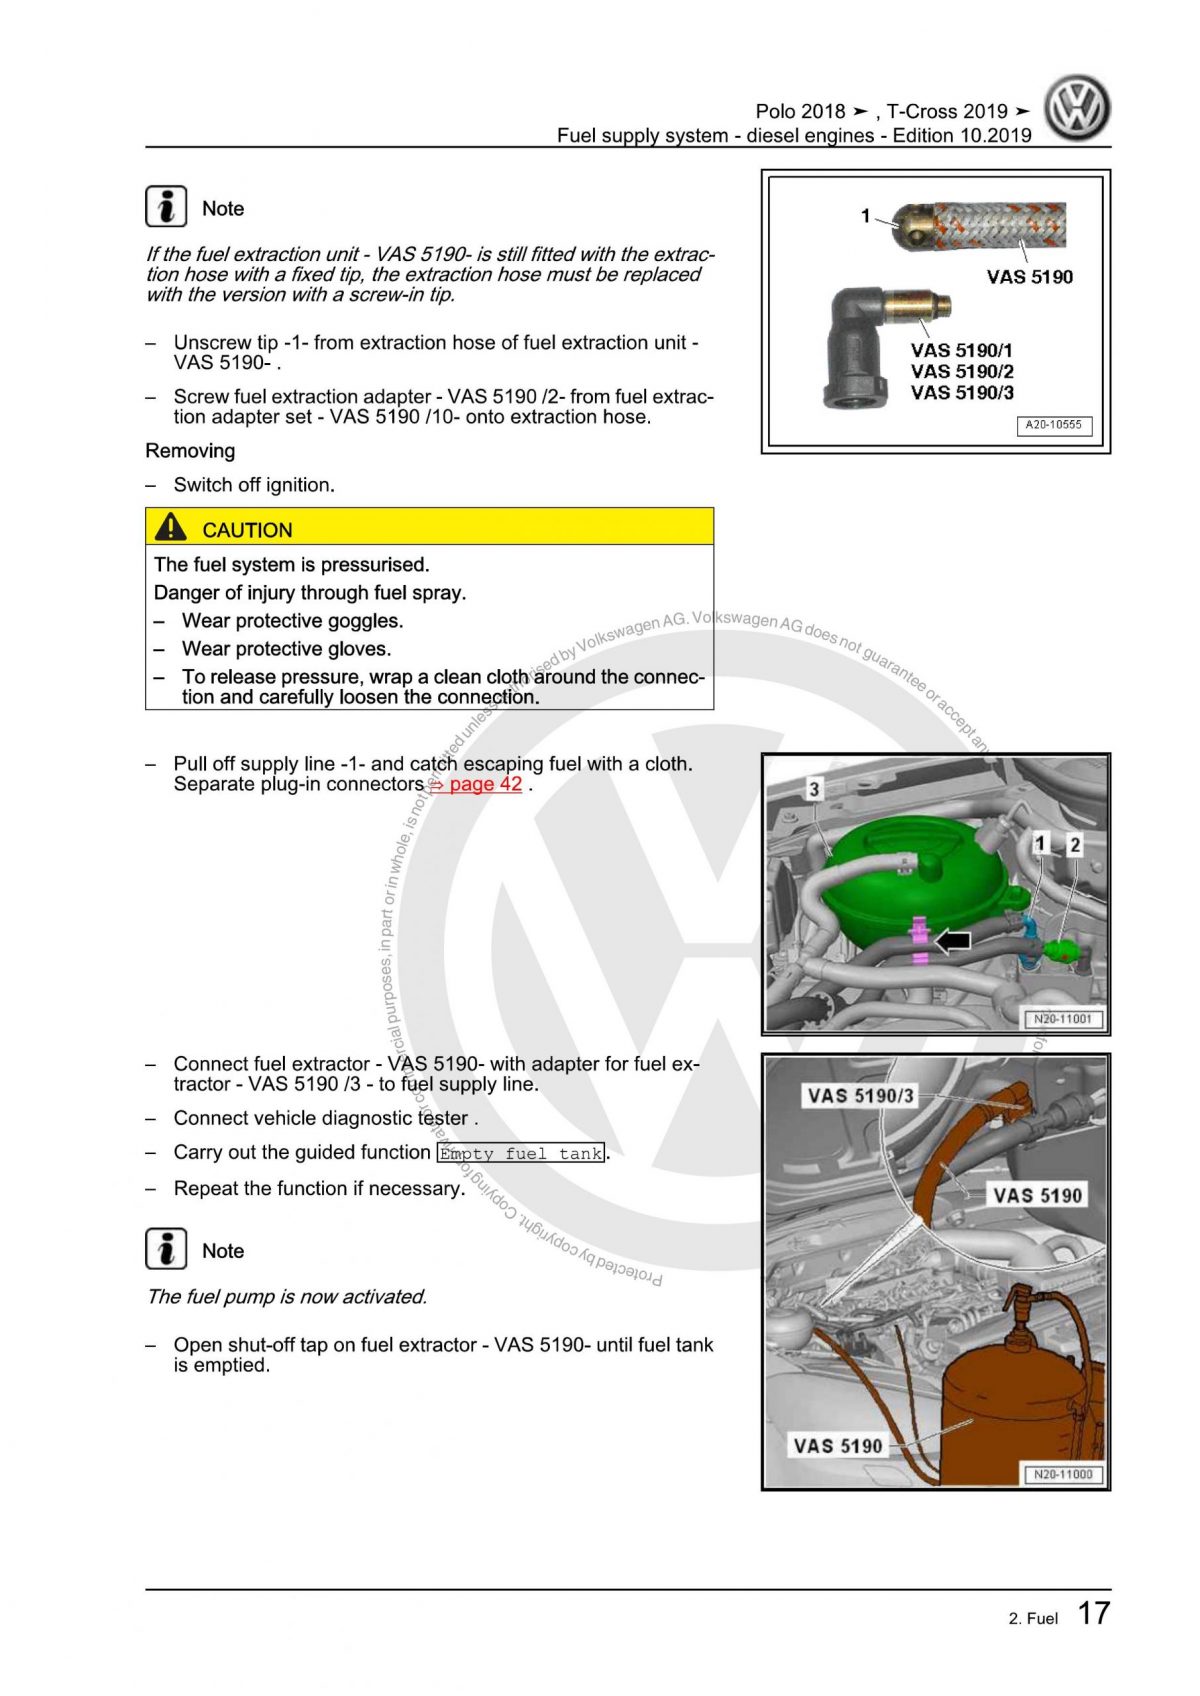 VW Diesel Engines Fuel Supply System OEM Workshop Manual